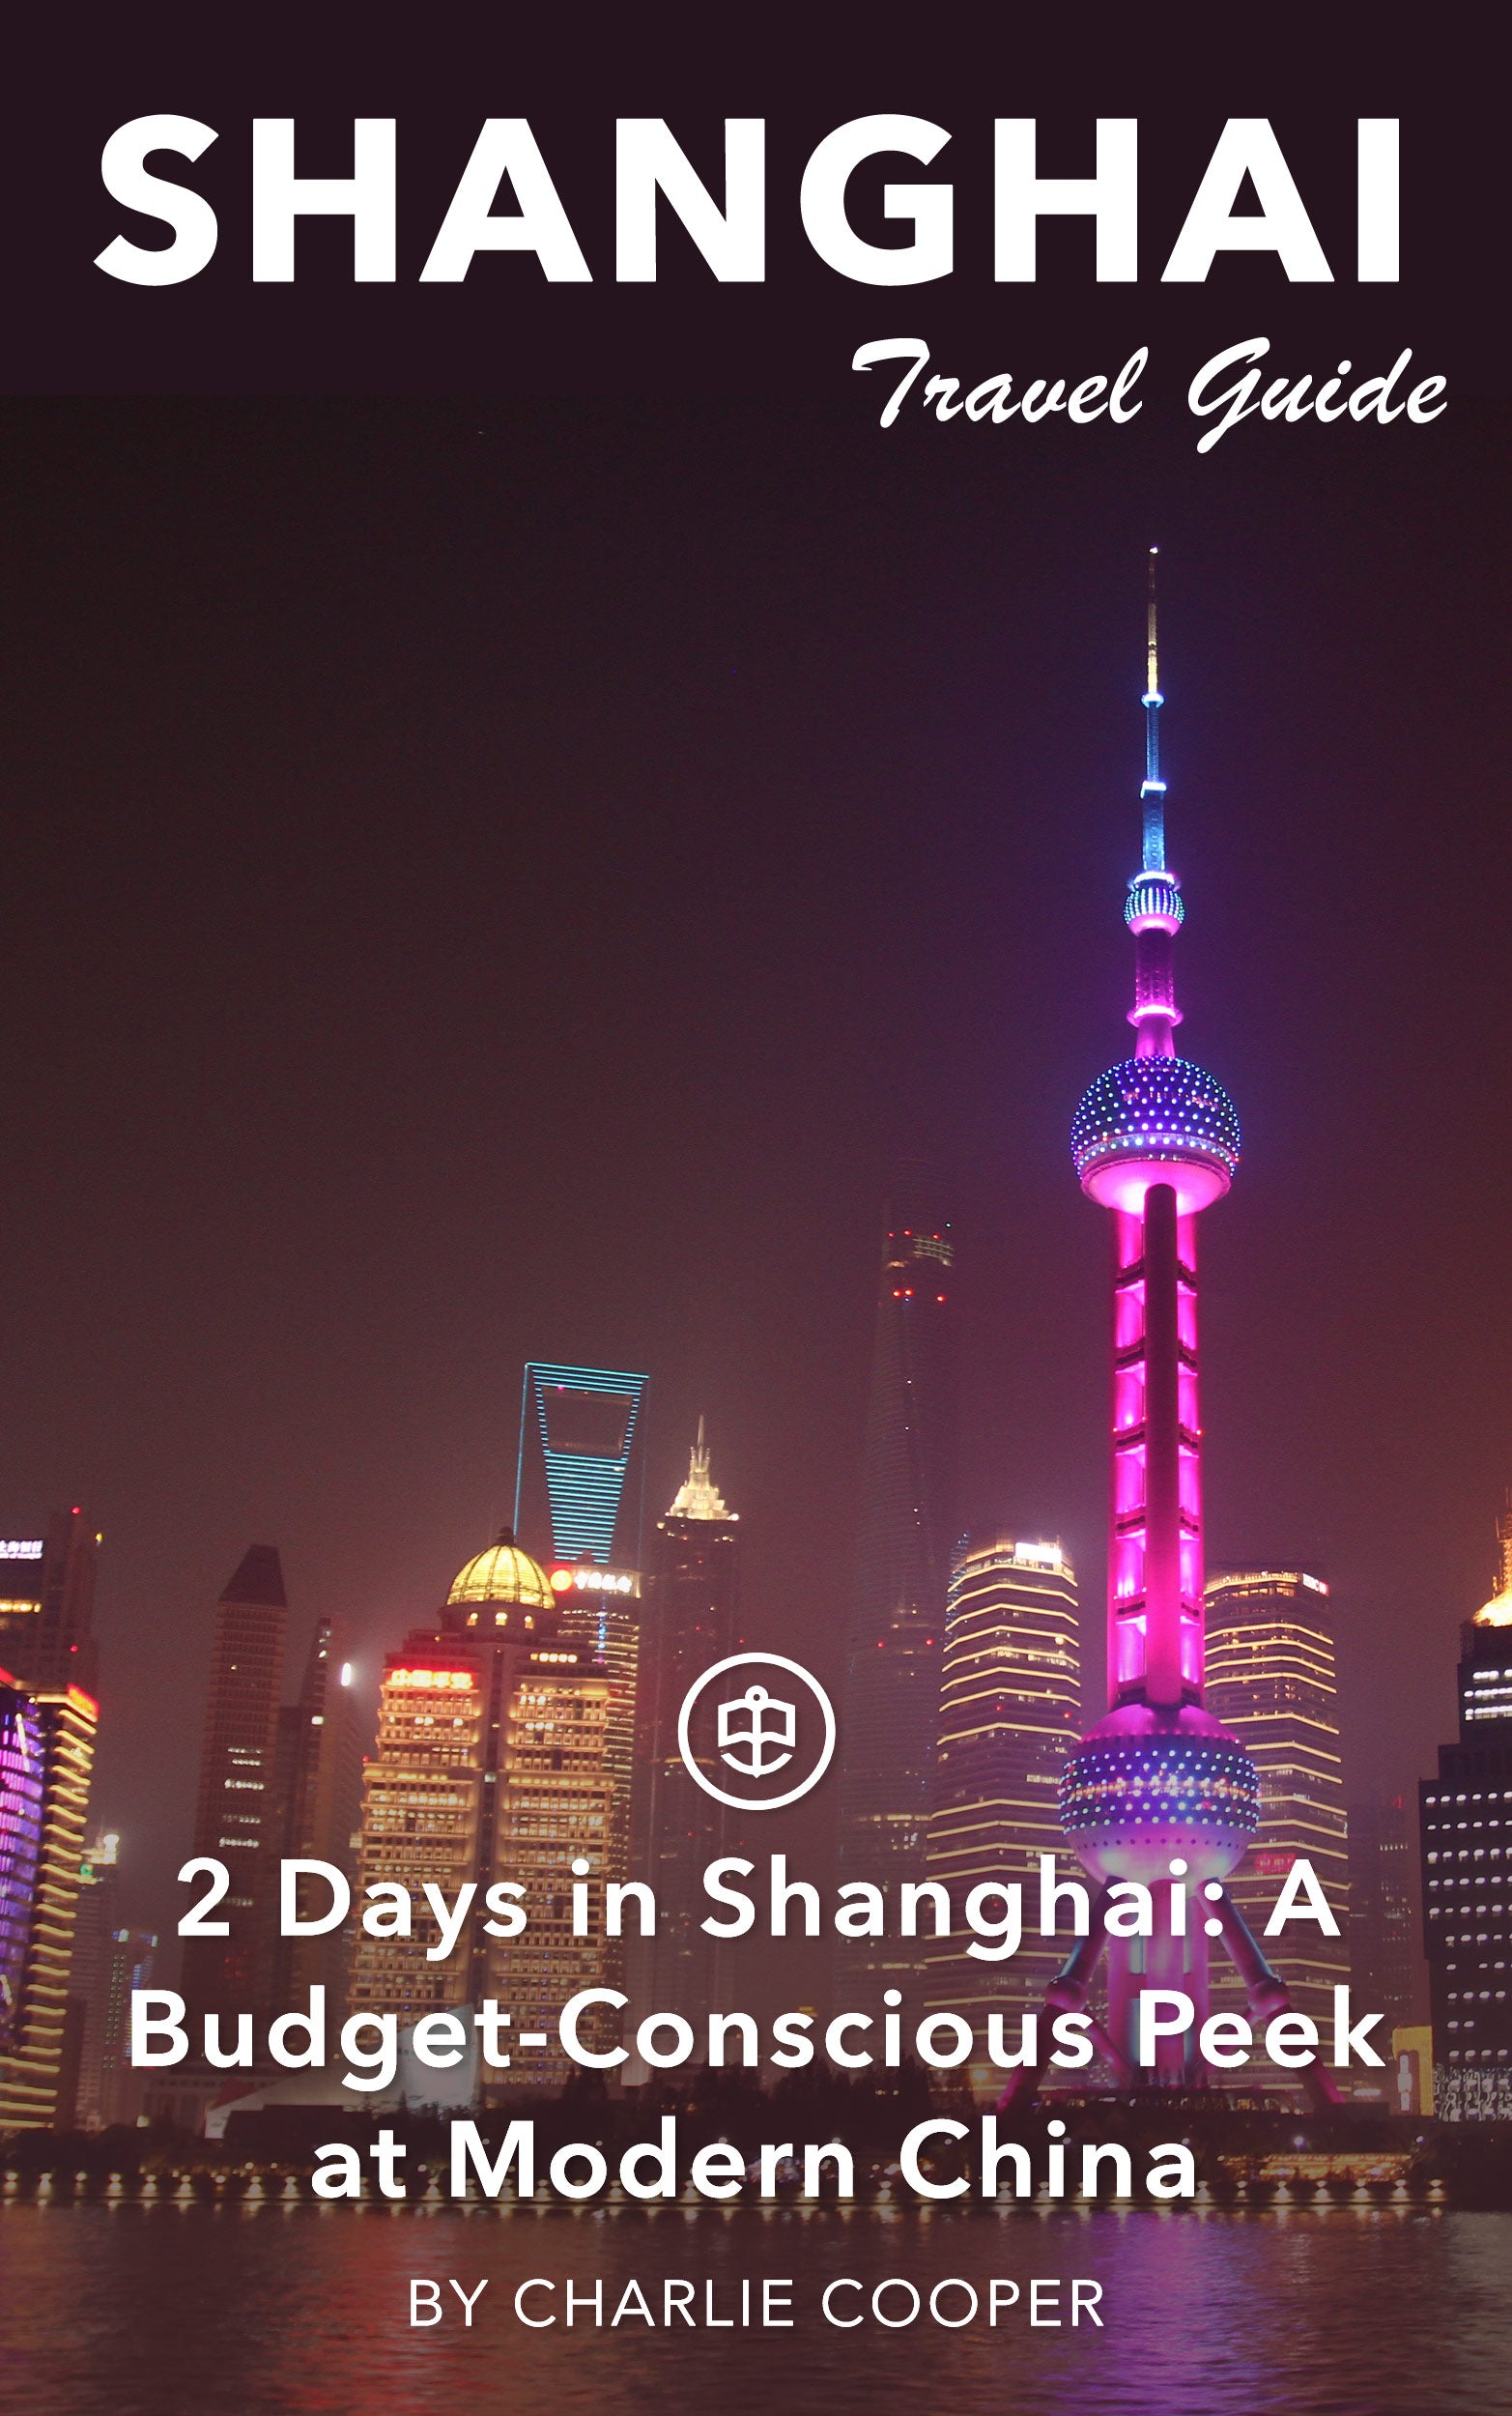 2 Days in Shanghai: A Budget-Conscious Peek at Modern China